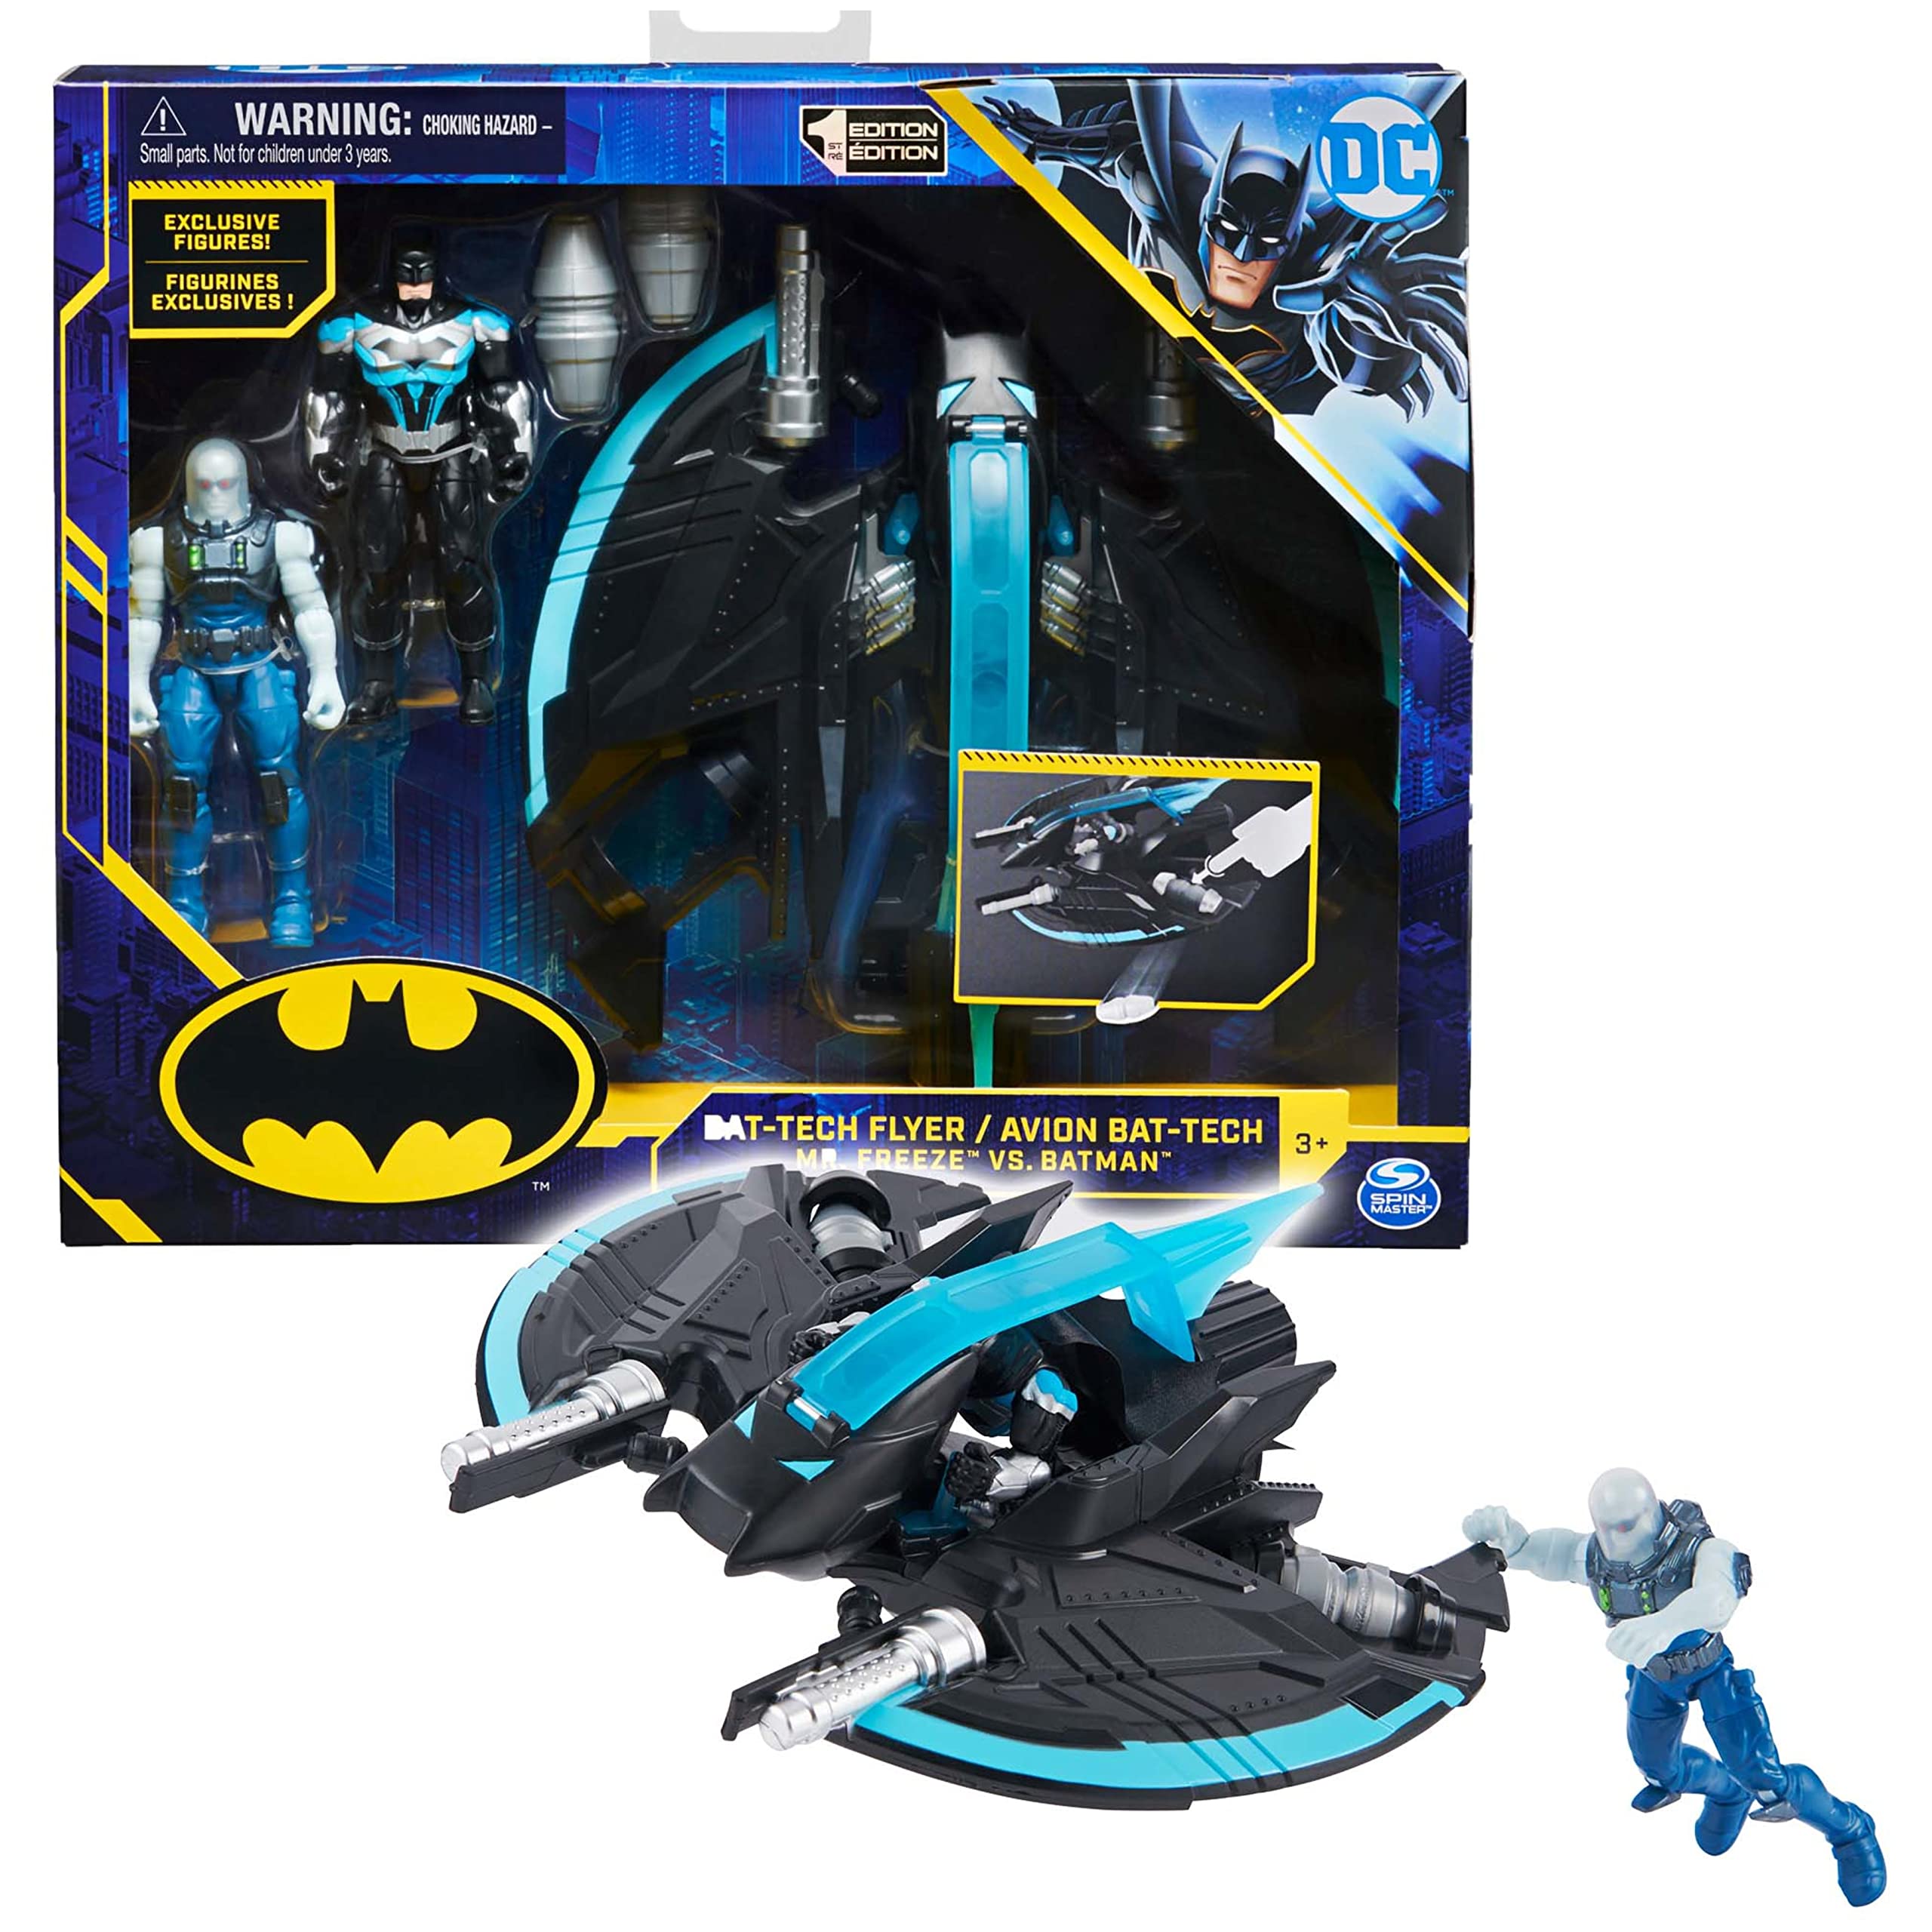 Mua DC Comics Batman Bat-Tech Flyer with 4-inch Exclusive Mr. Freeze and Batman  Action Figures, Kids Toys for Boys Ages 3 and Up trên Amazon Mỹ chính hãng  2023 | Giaonhan247